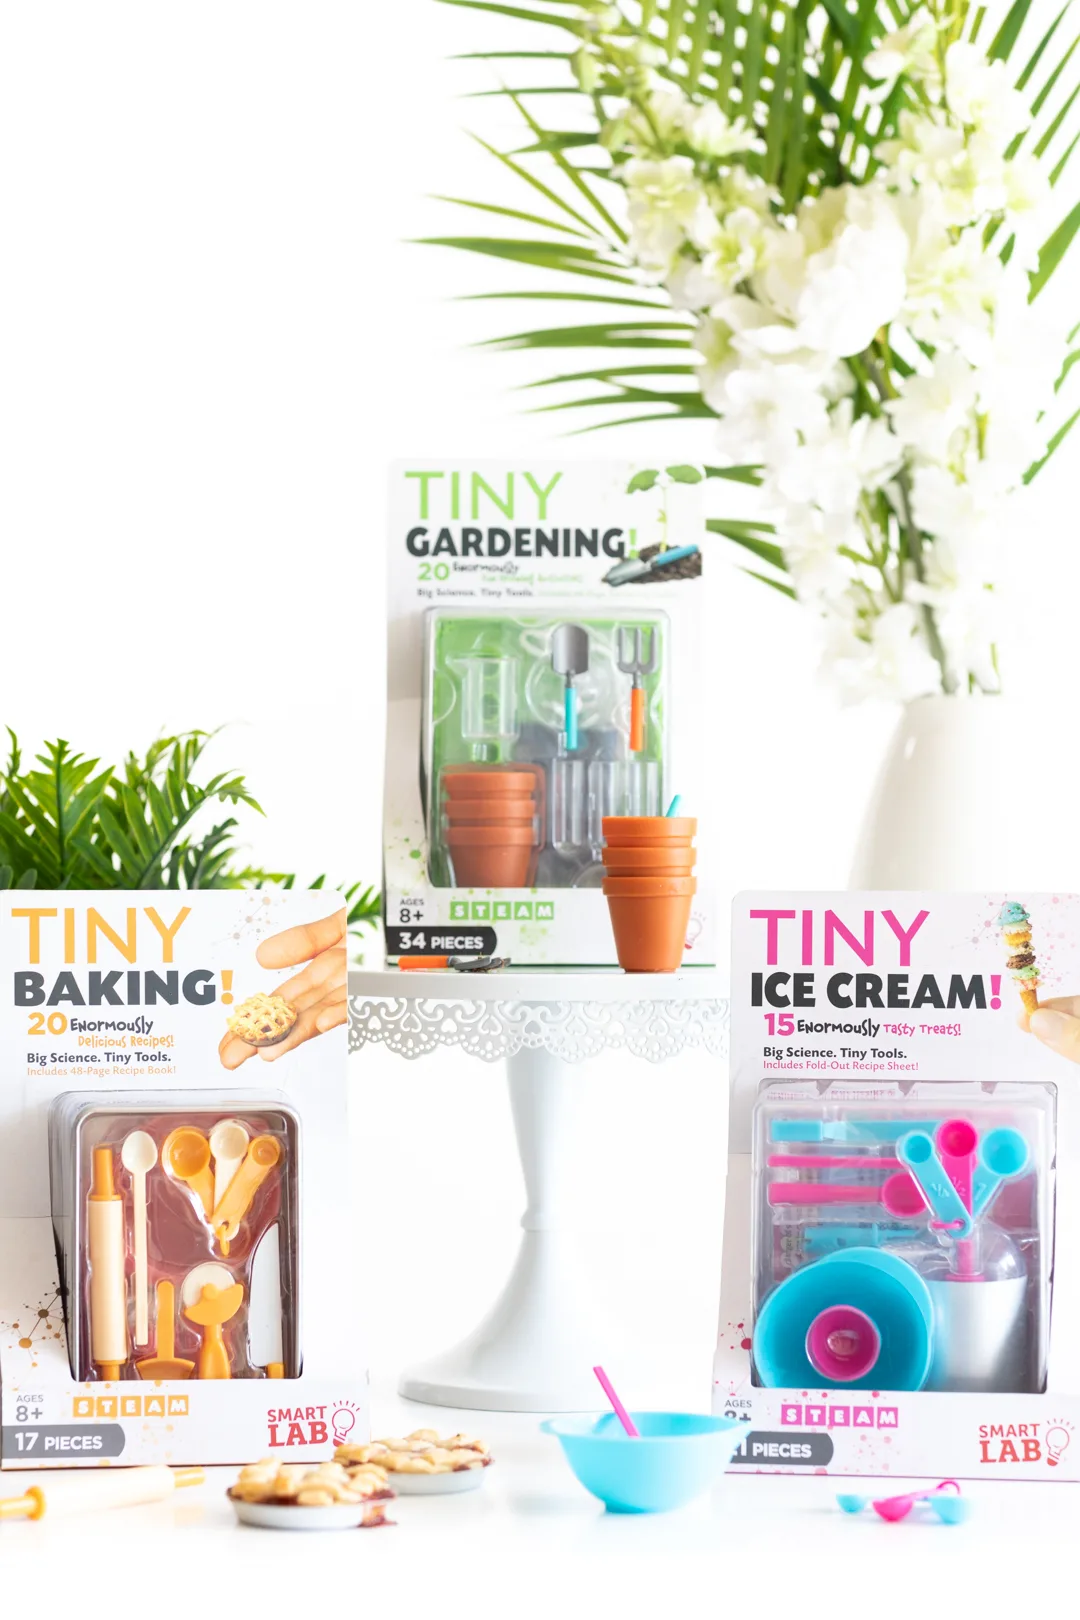 Tiny Gardening Kit, Tiny Baking Kit, Tiny Ice Cream Kit packages